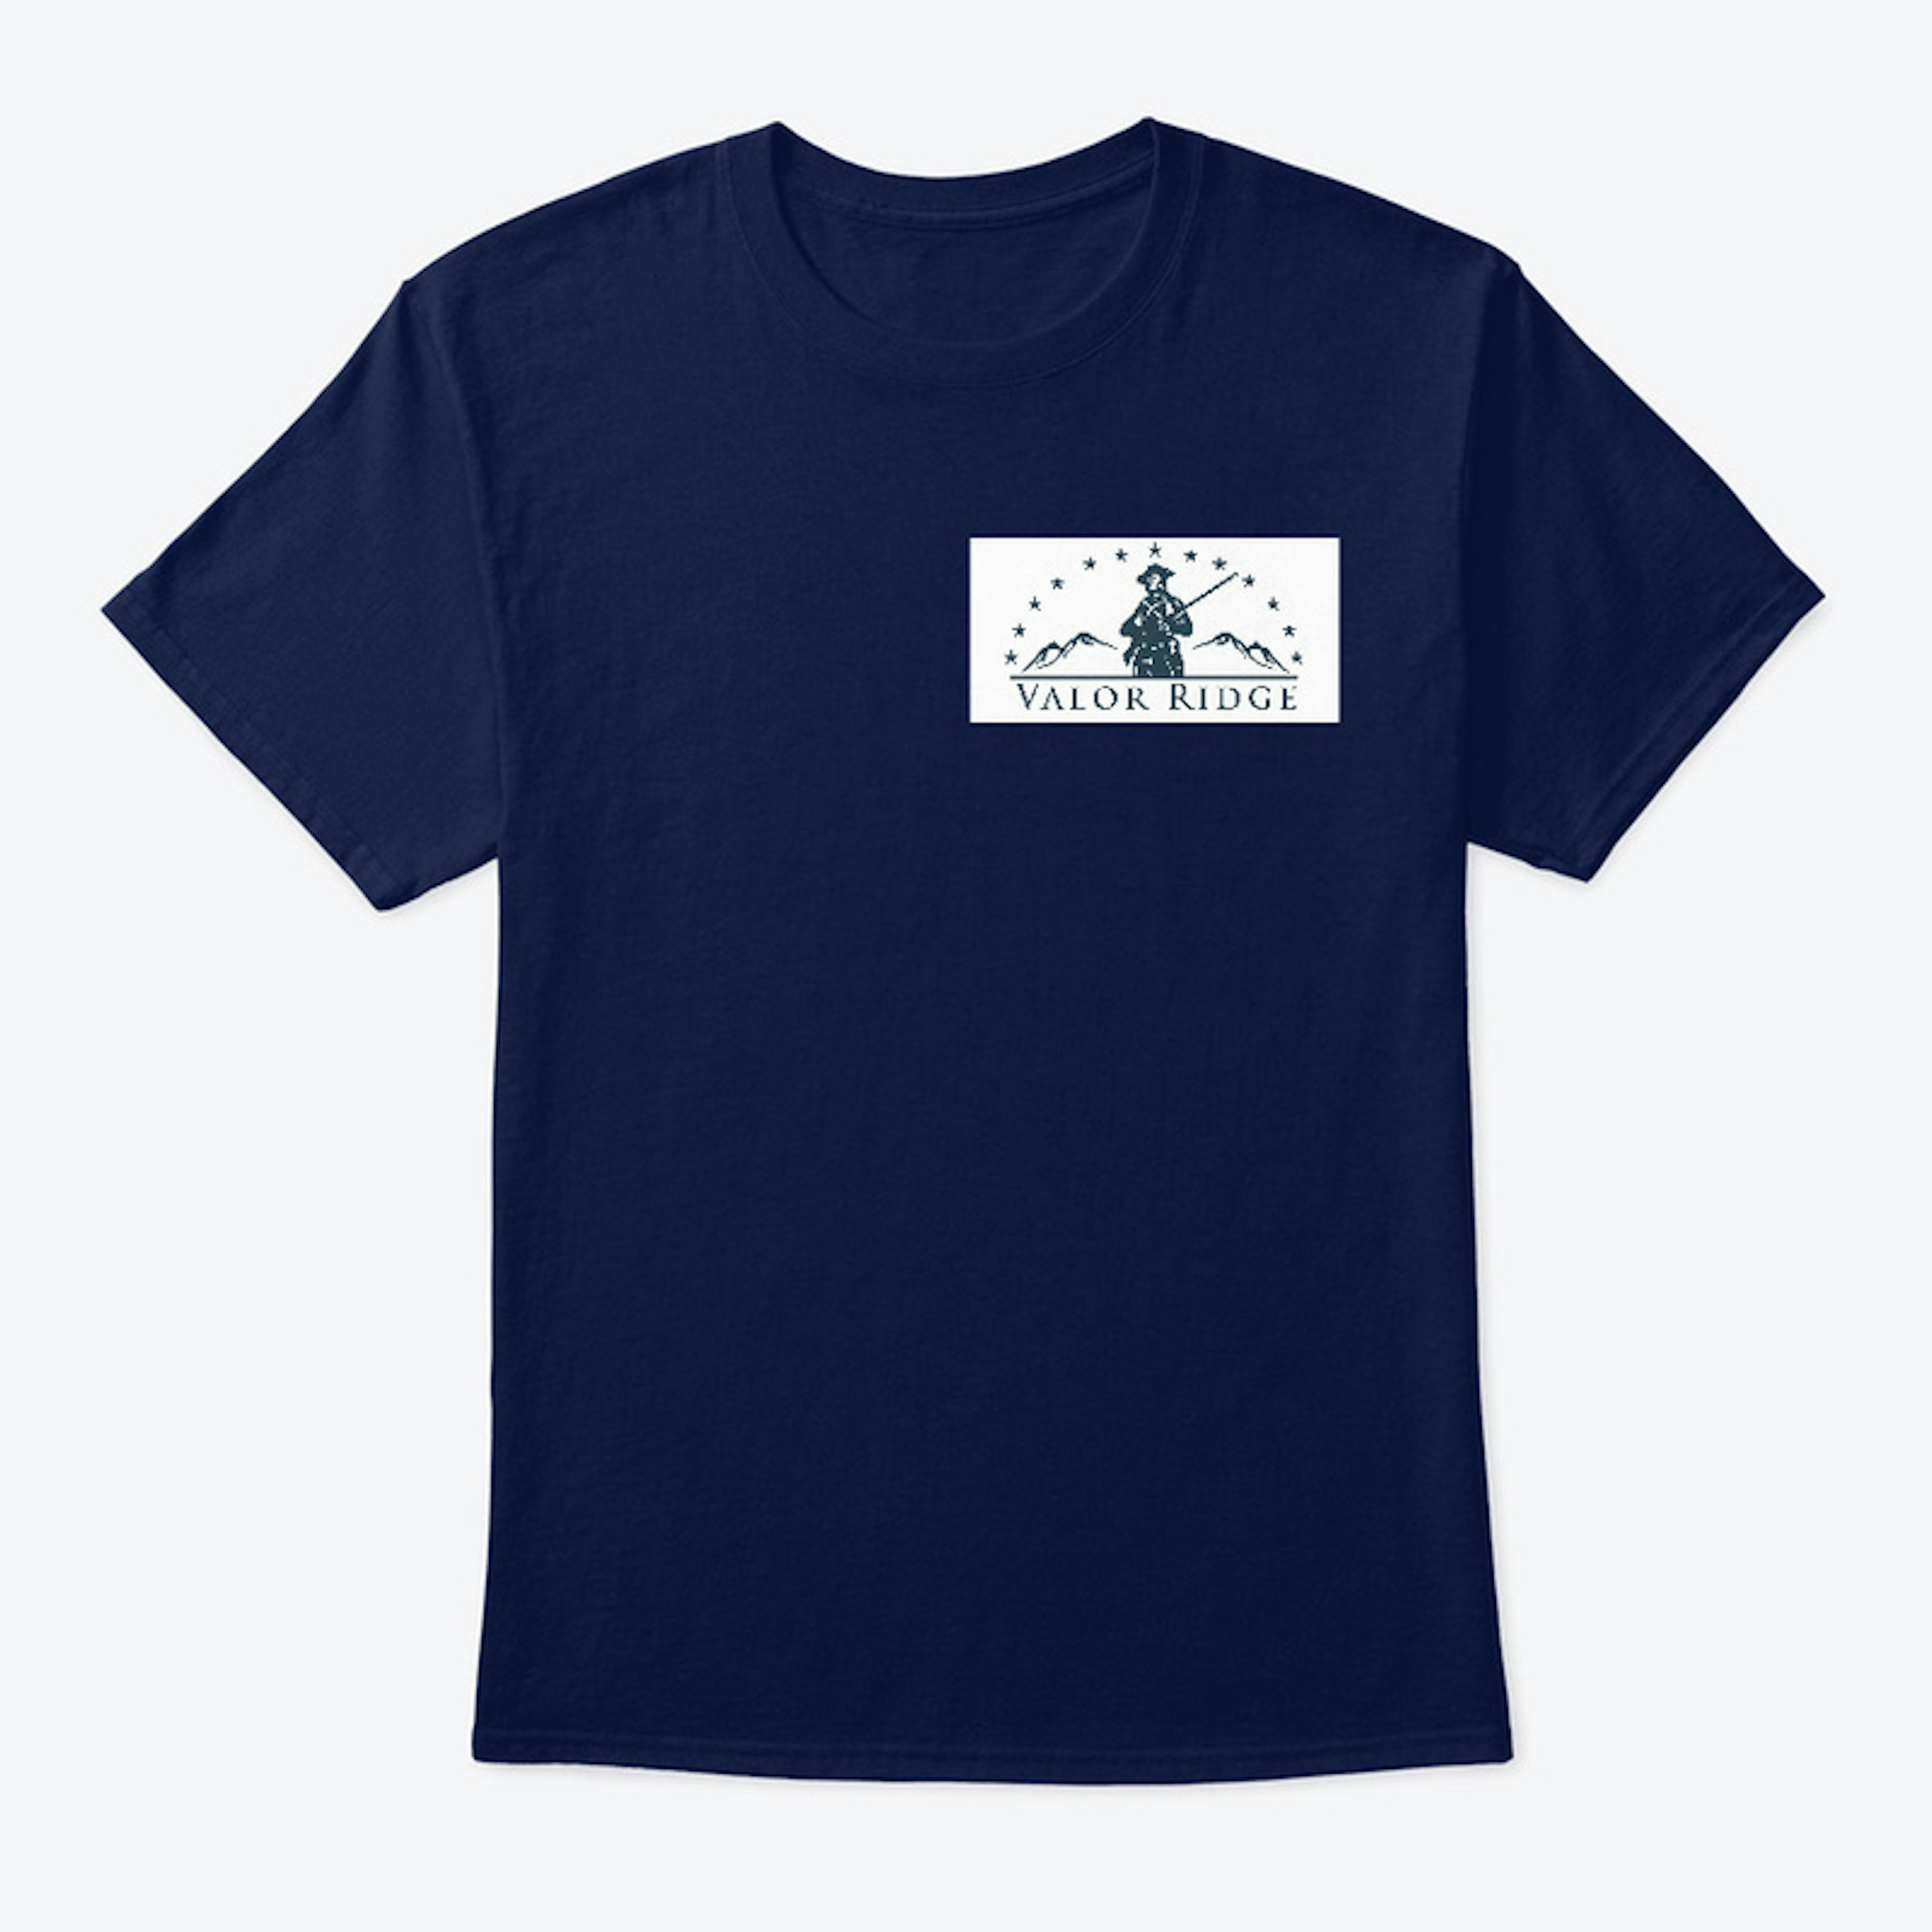 Valor Ridge T-Shirt